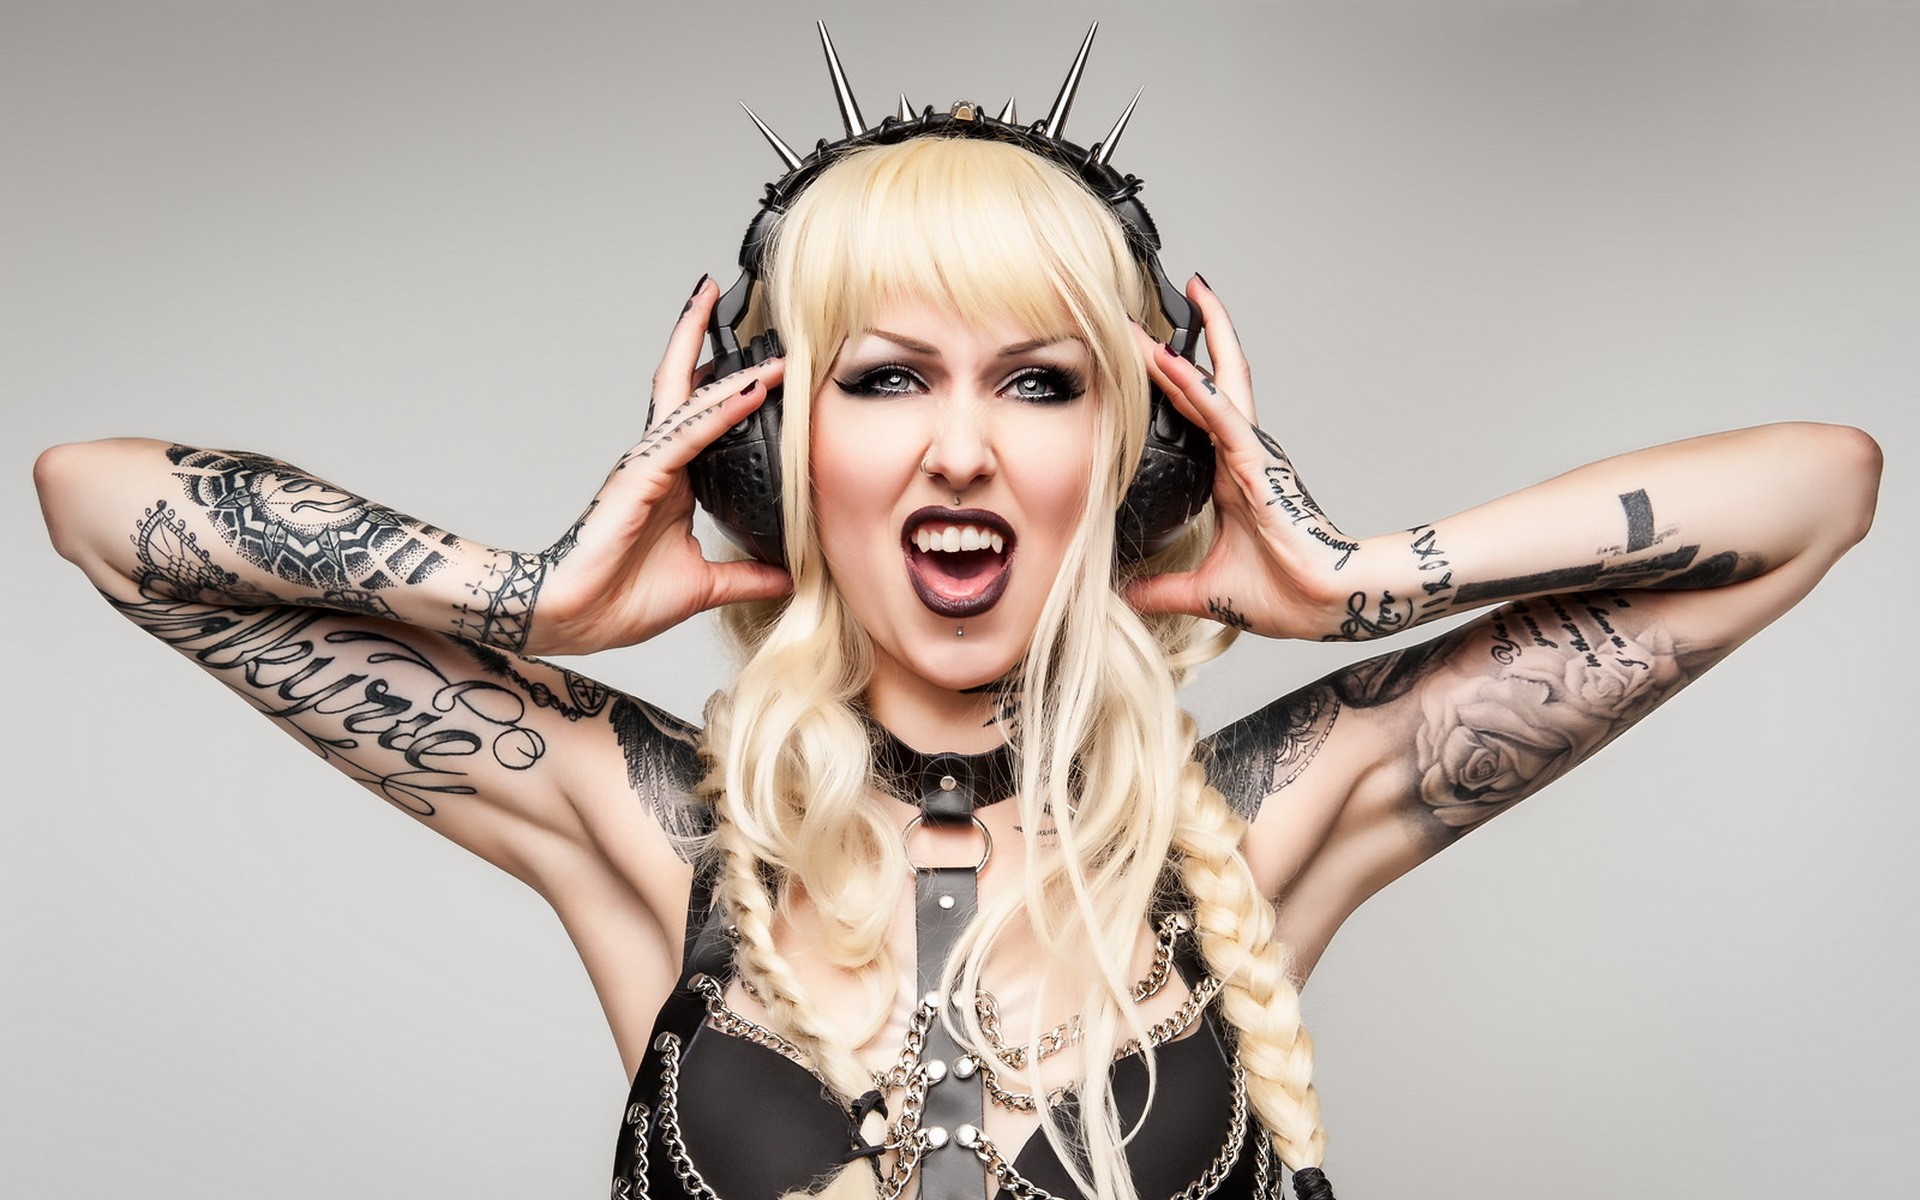 Women Tattoo Blonde Headphones Spikes Pierced Nose Pierced Lips Alternative Subculture 1920x1200